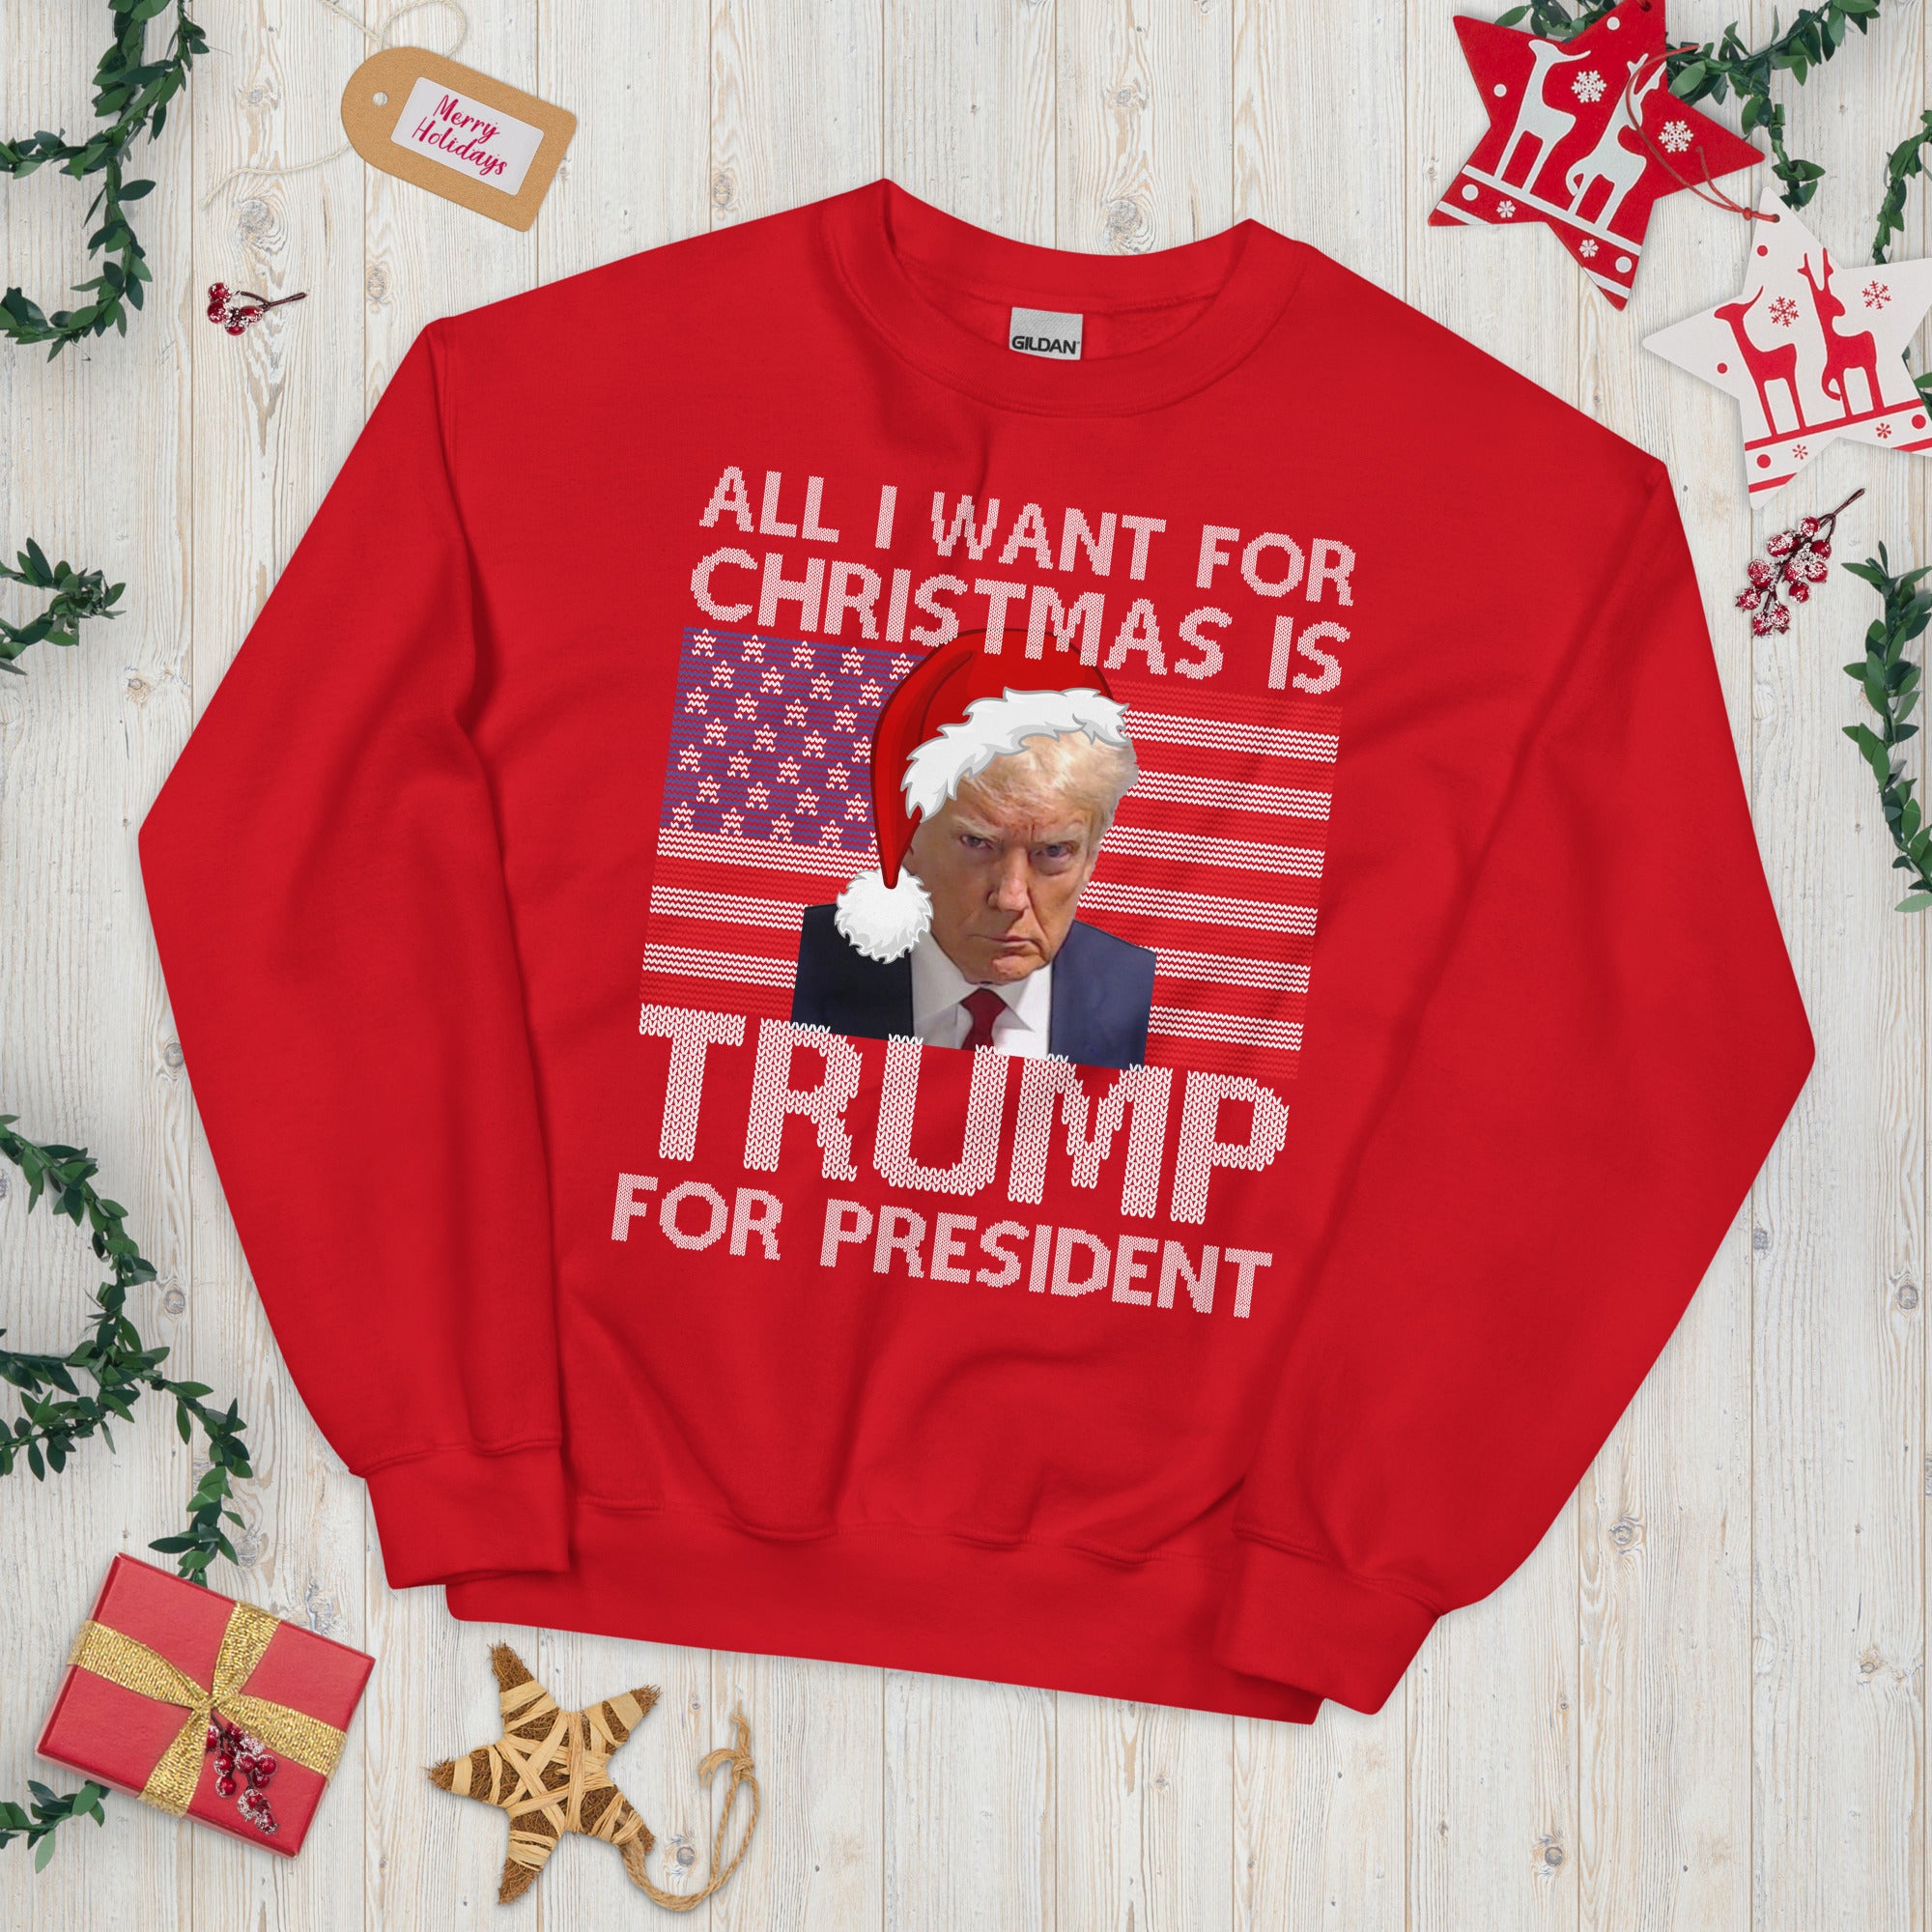 All I Want For Christmas Is Trump For President, Trumpmugshot Sweatshirt, Funny Donald Trump Christmas Sweater, Xmas Ugly Christmas Sweater - Madeinsea©